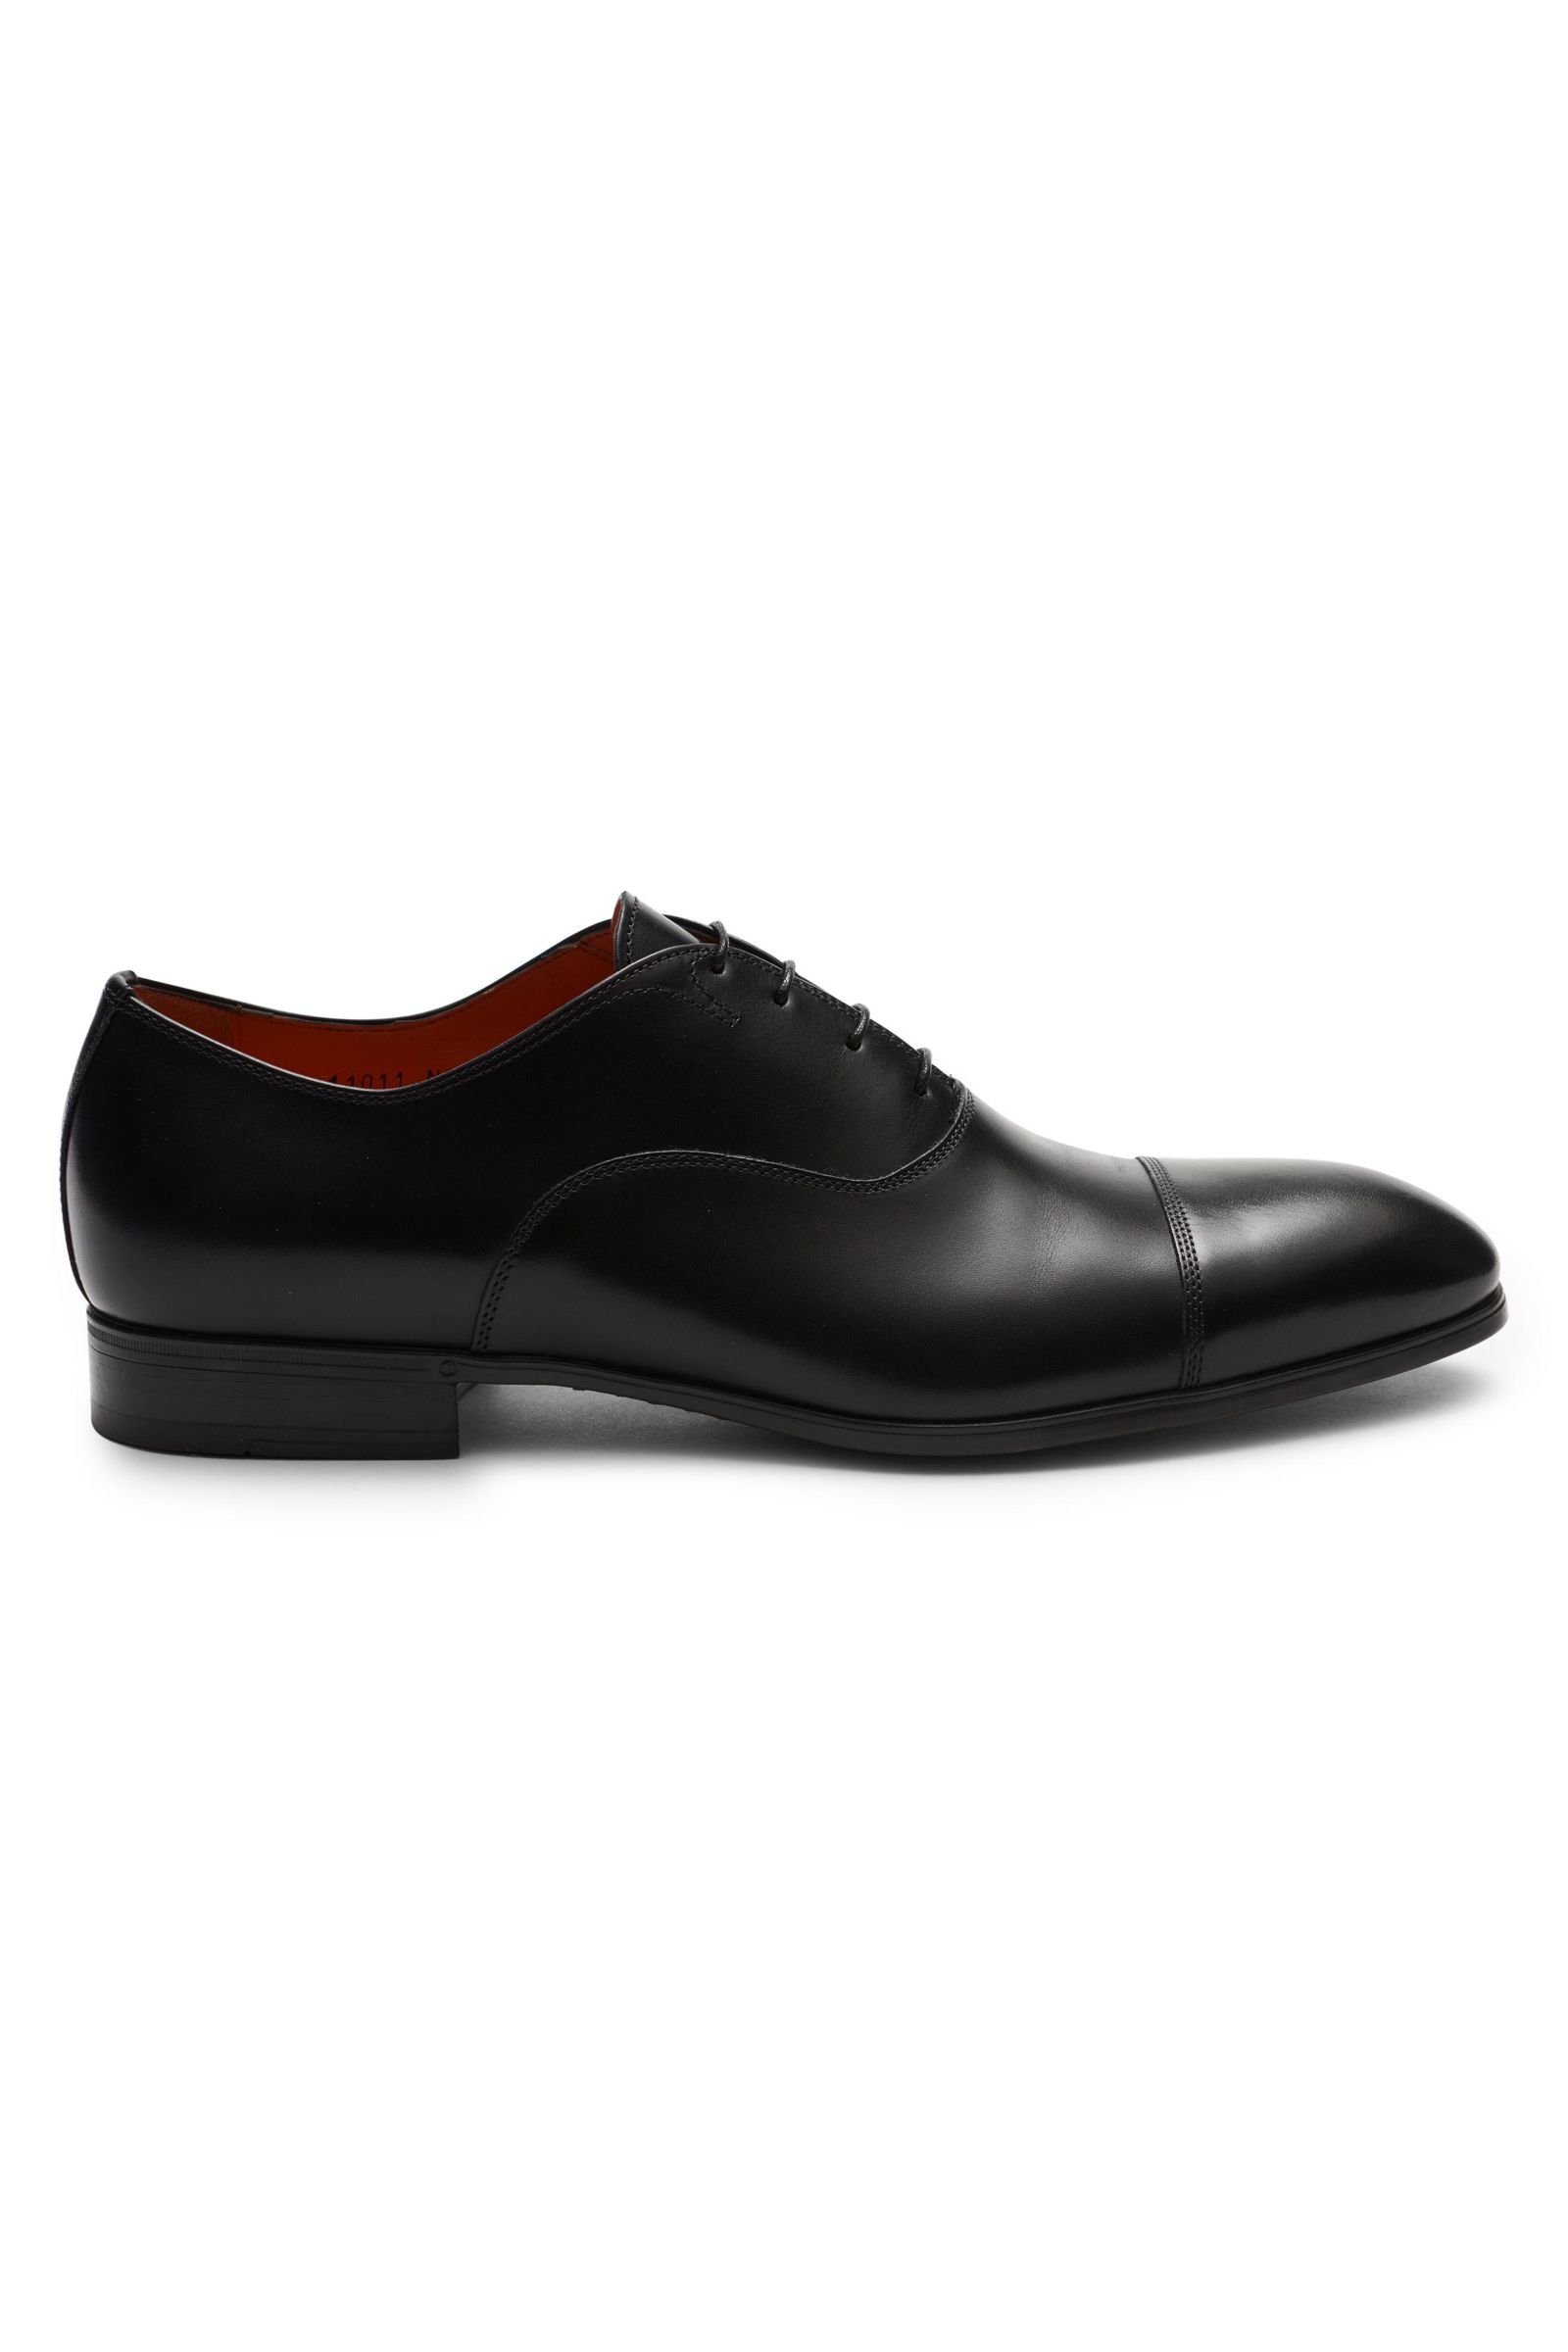 SANTONI Oxford shoes black | BRAUN Hamburg